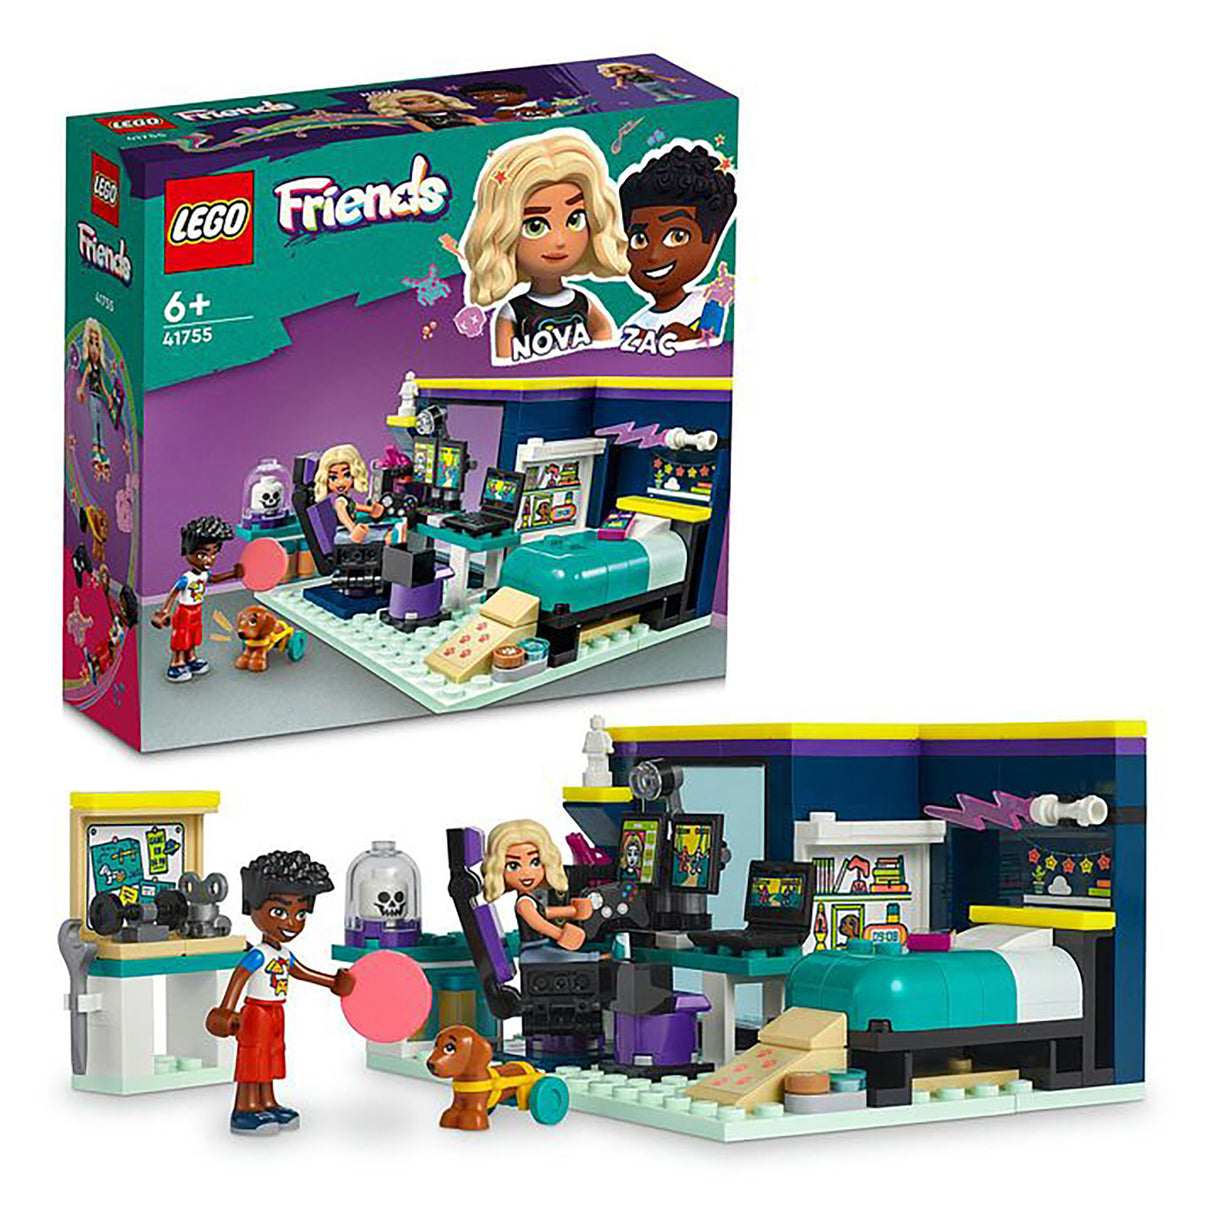 LEGO Friends Nova's Room 41755 (179 pieces)